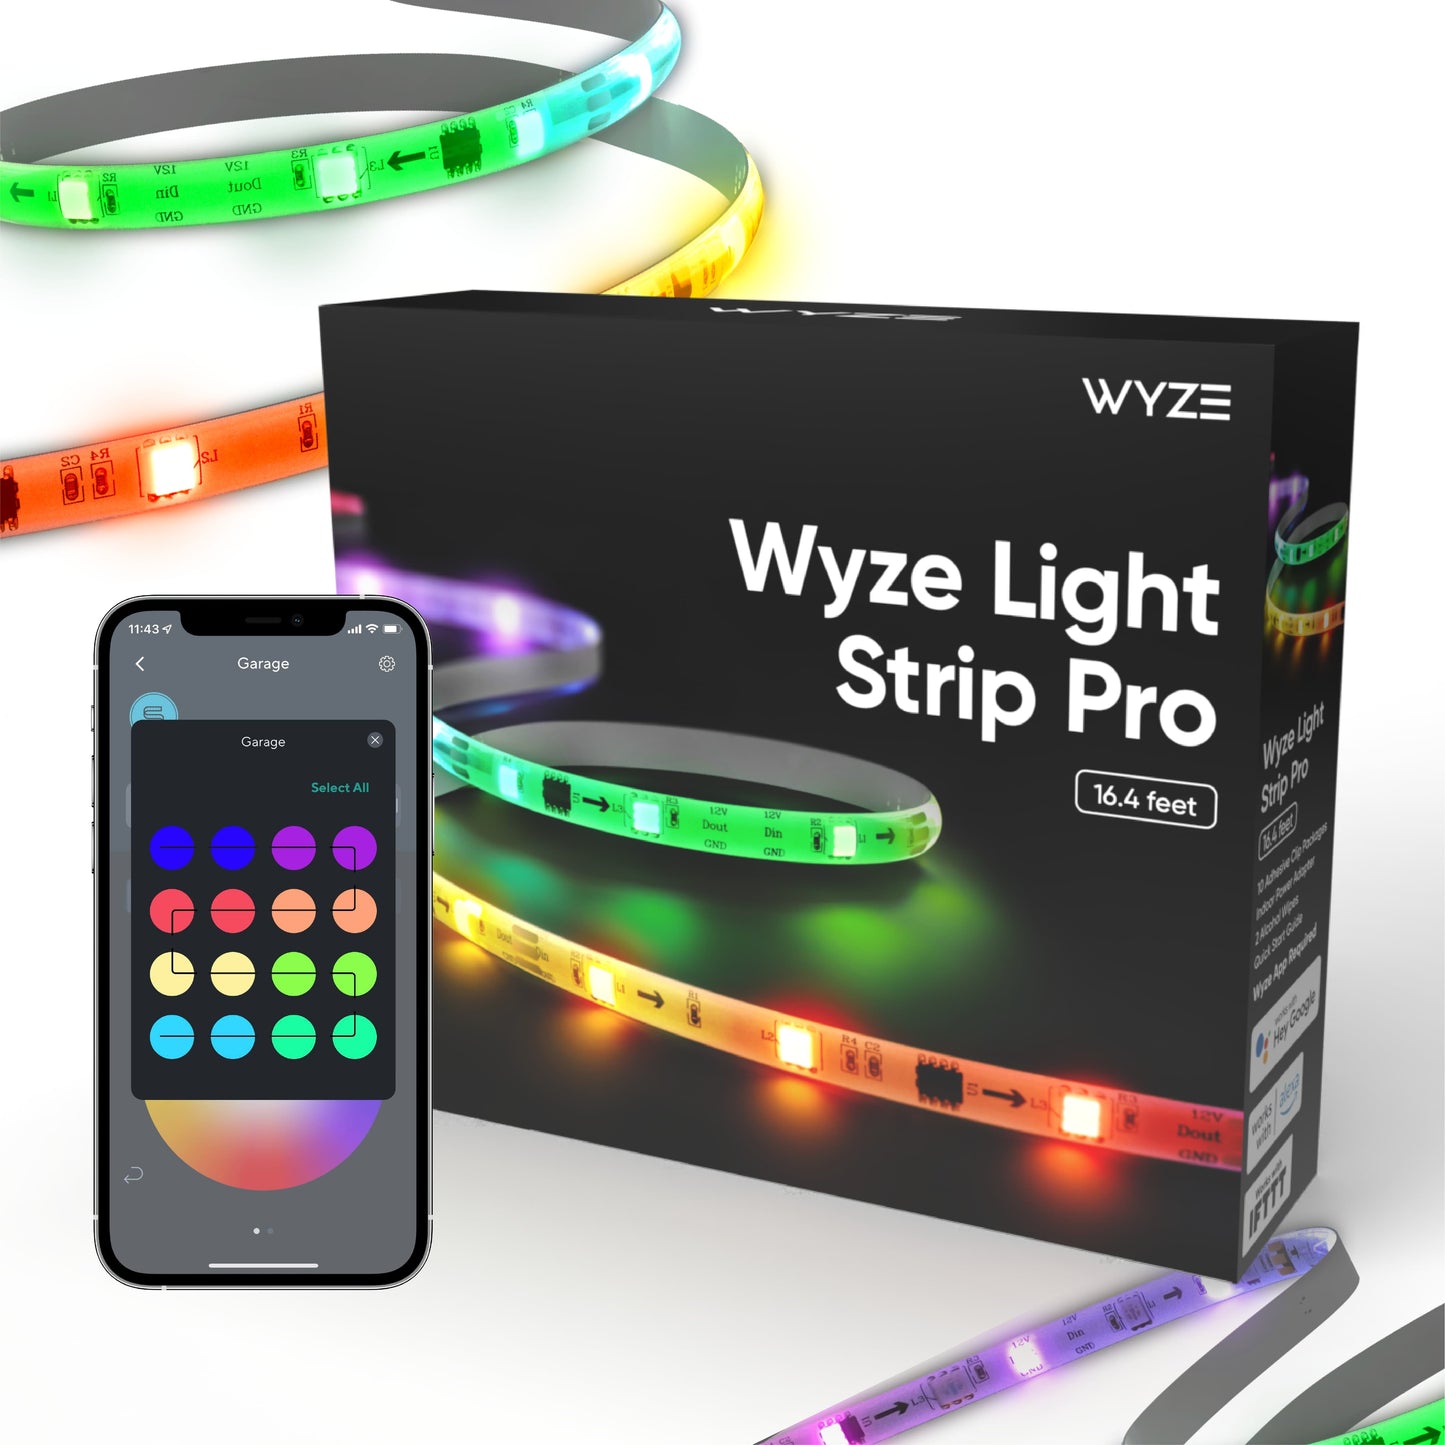 Smart LED Strip Lights,32.8ft RGB LED Lights with App Control, 16 Million  Colors WiFi Light Strips for Bedroom,Kitchen,Dorm Room, Bar, Work with  Alexa